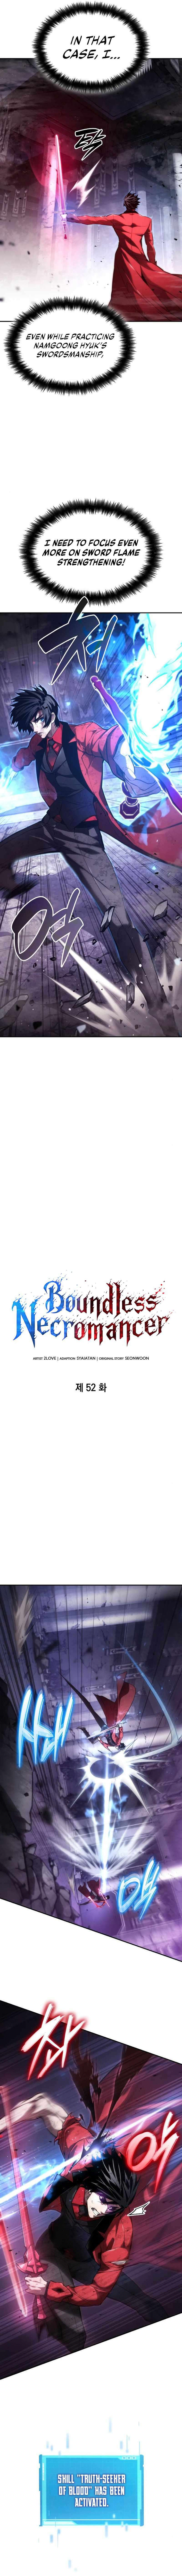 boundless-necromancer-chapter-52-4